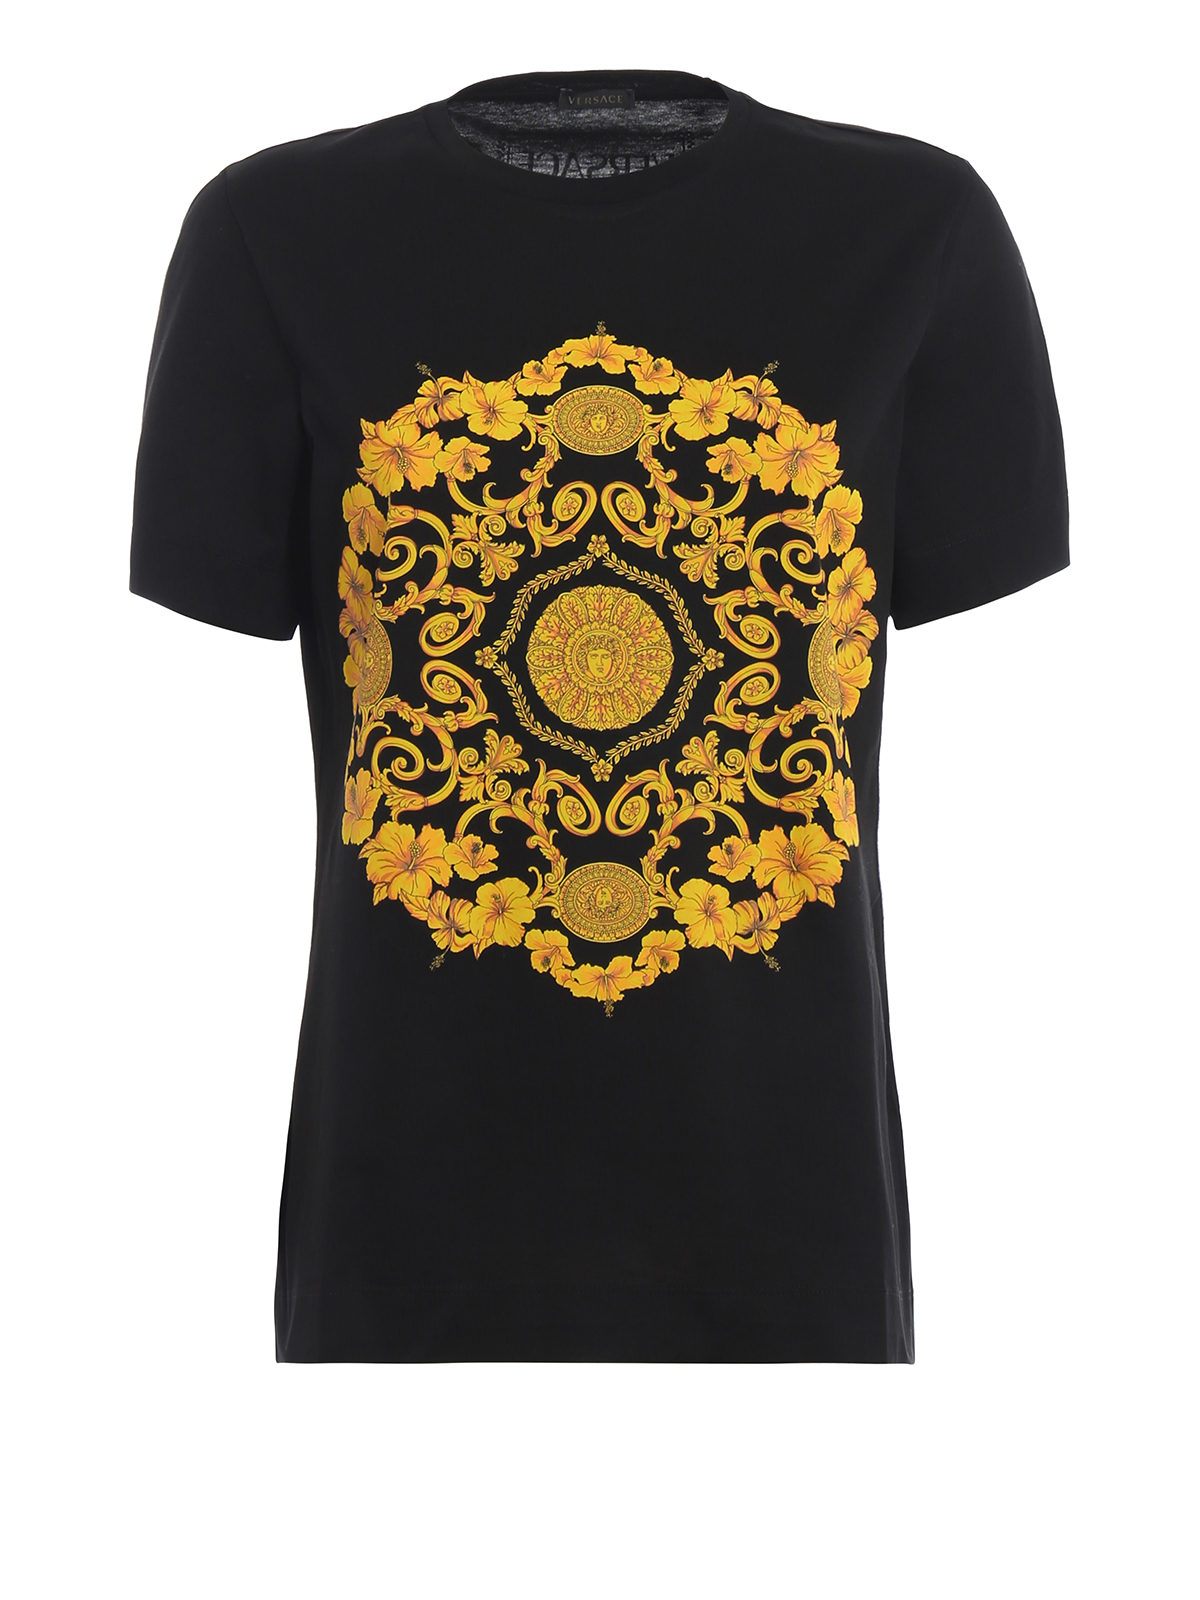 baroque print t shirt